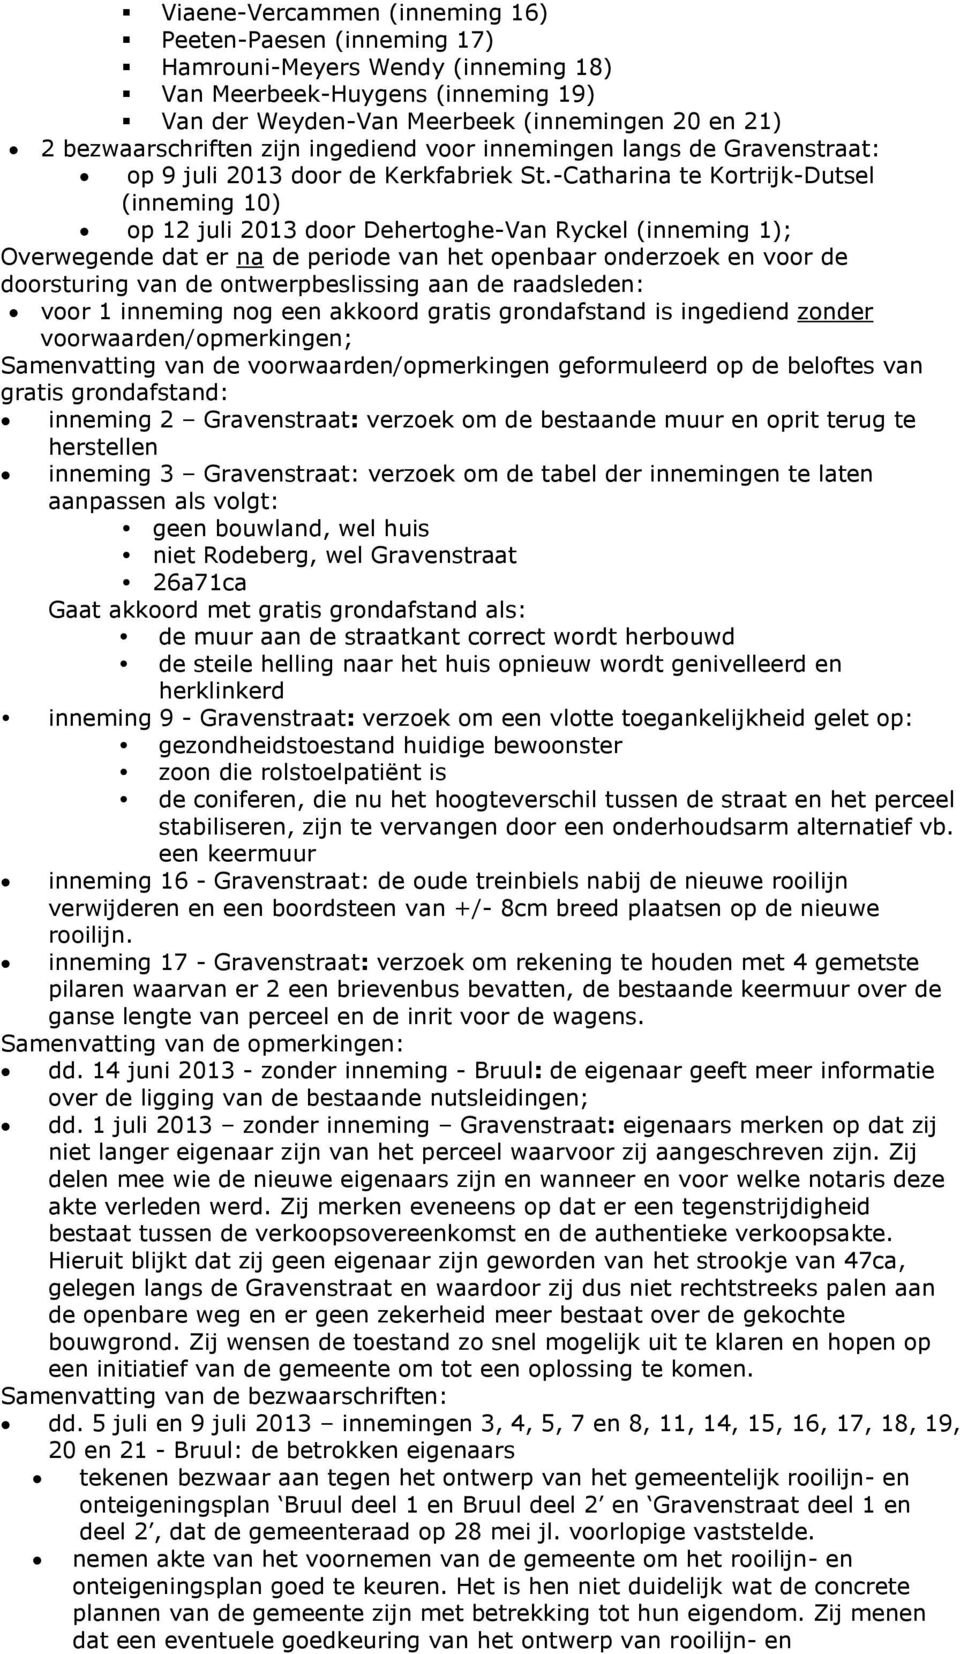 -Catharina te Krtrijk-Dutsel (inneming 10) p 12 juli 2013 dr Dehertghe-Van Ryckel (inneming 1); Overwegende dat er na de peride van het penbaar nderzek en vr de drsturing van de ntwerpbeslissing aan